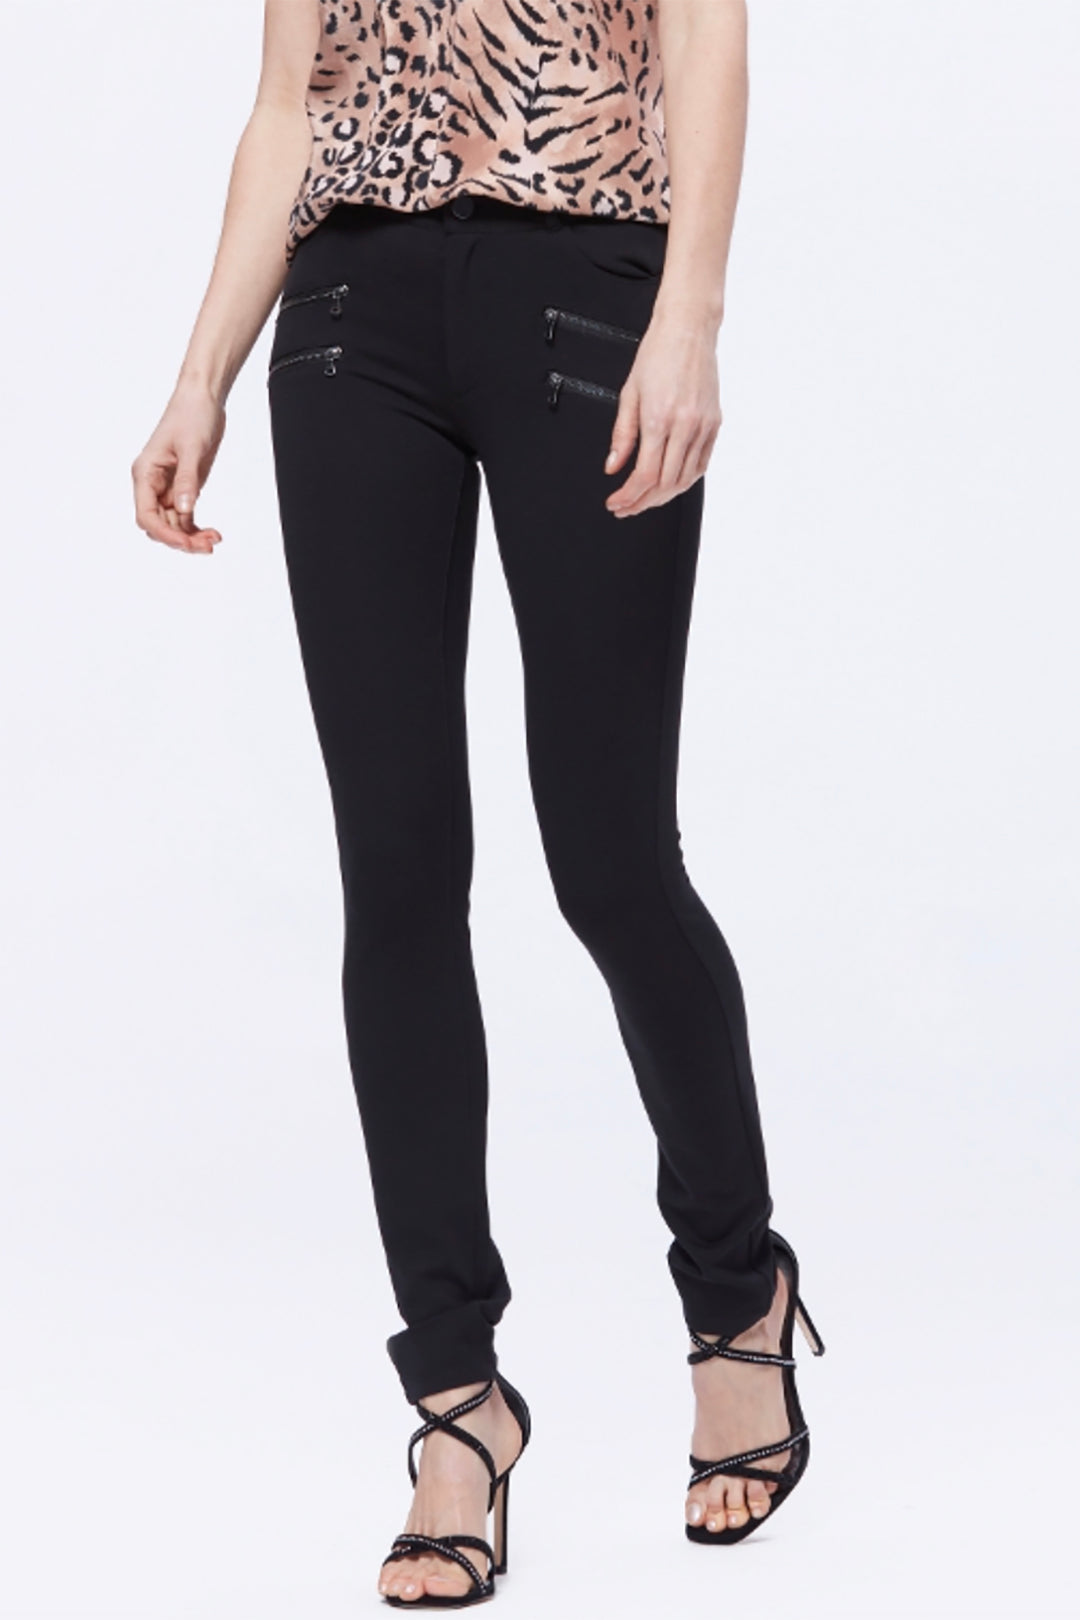 Paige - Edgemont Mid Rise Ultra Skinny Jean - Black - Pizazz Boutique